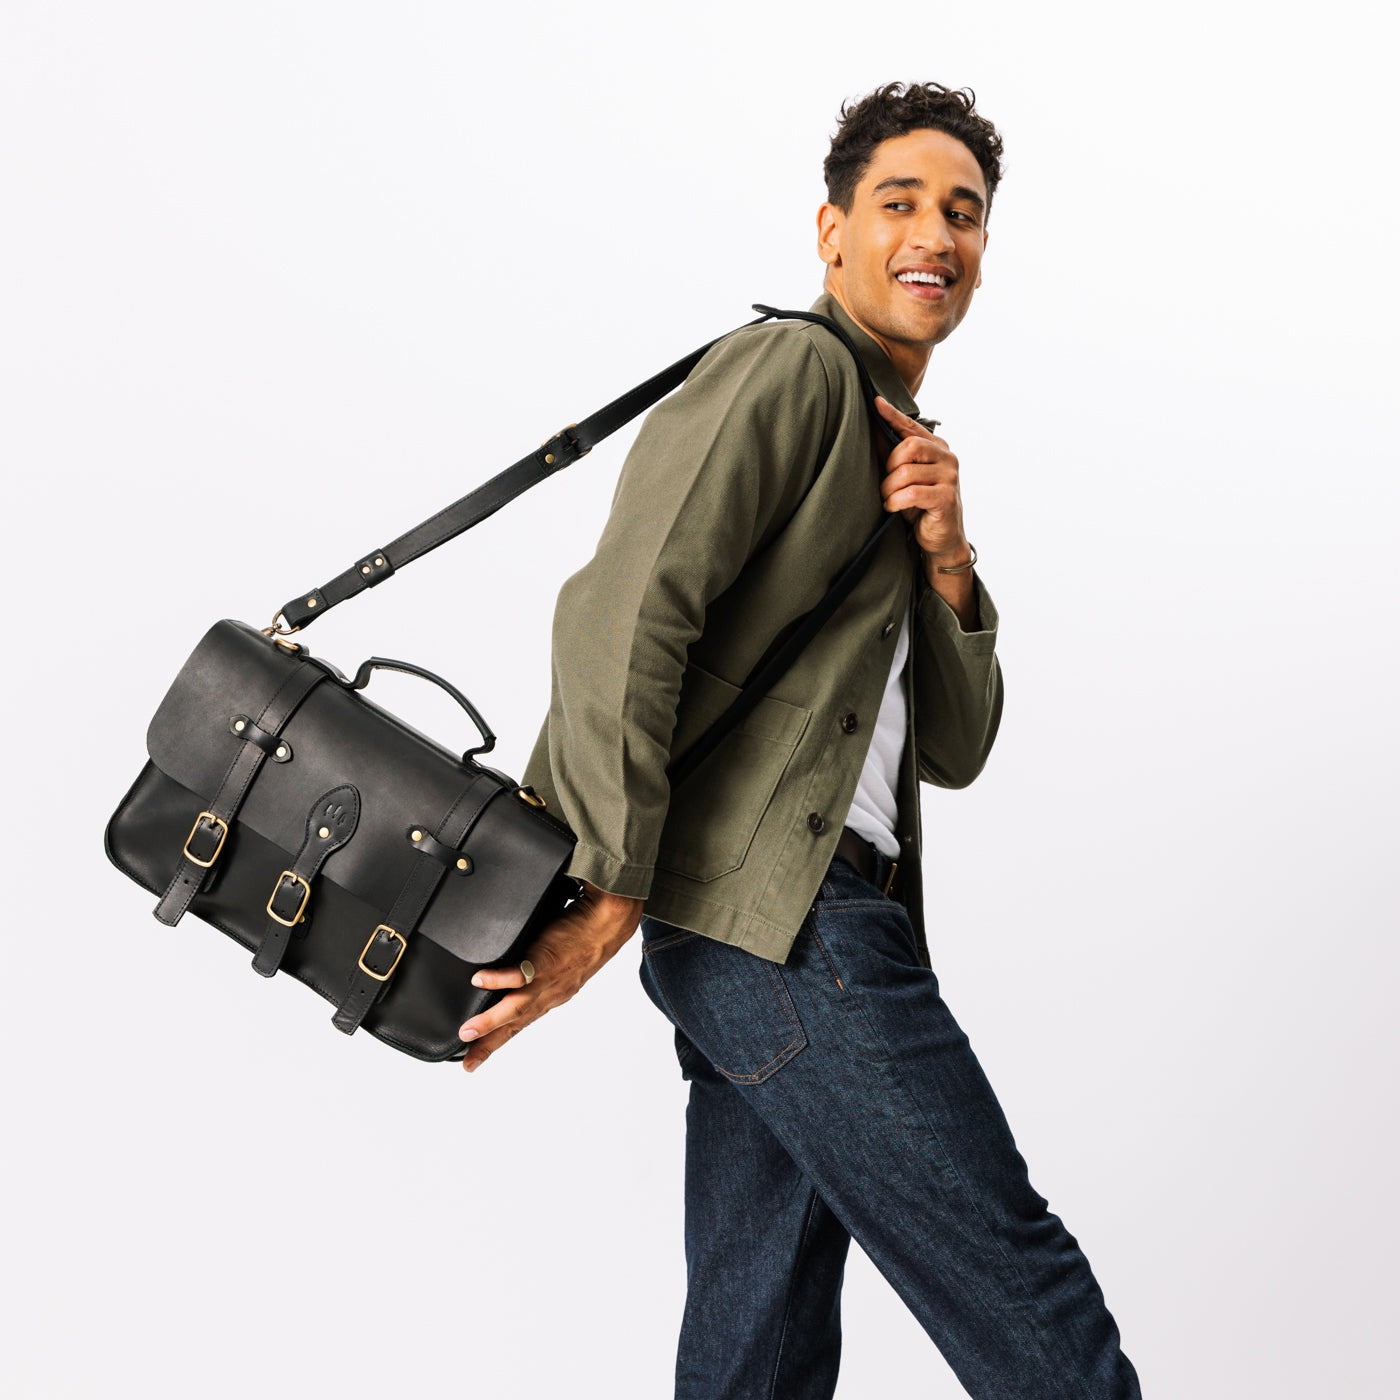 Classic XL Messenger Bag | Portland Leather Goods